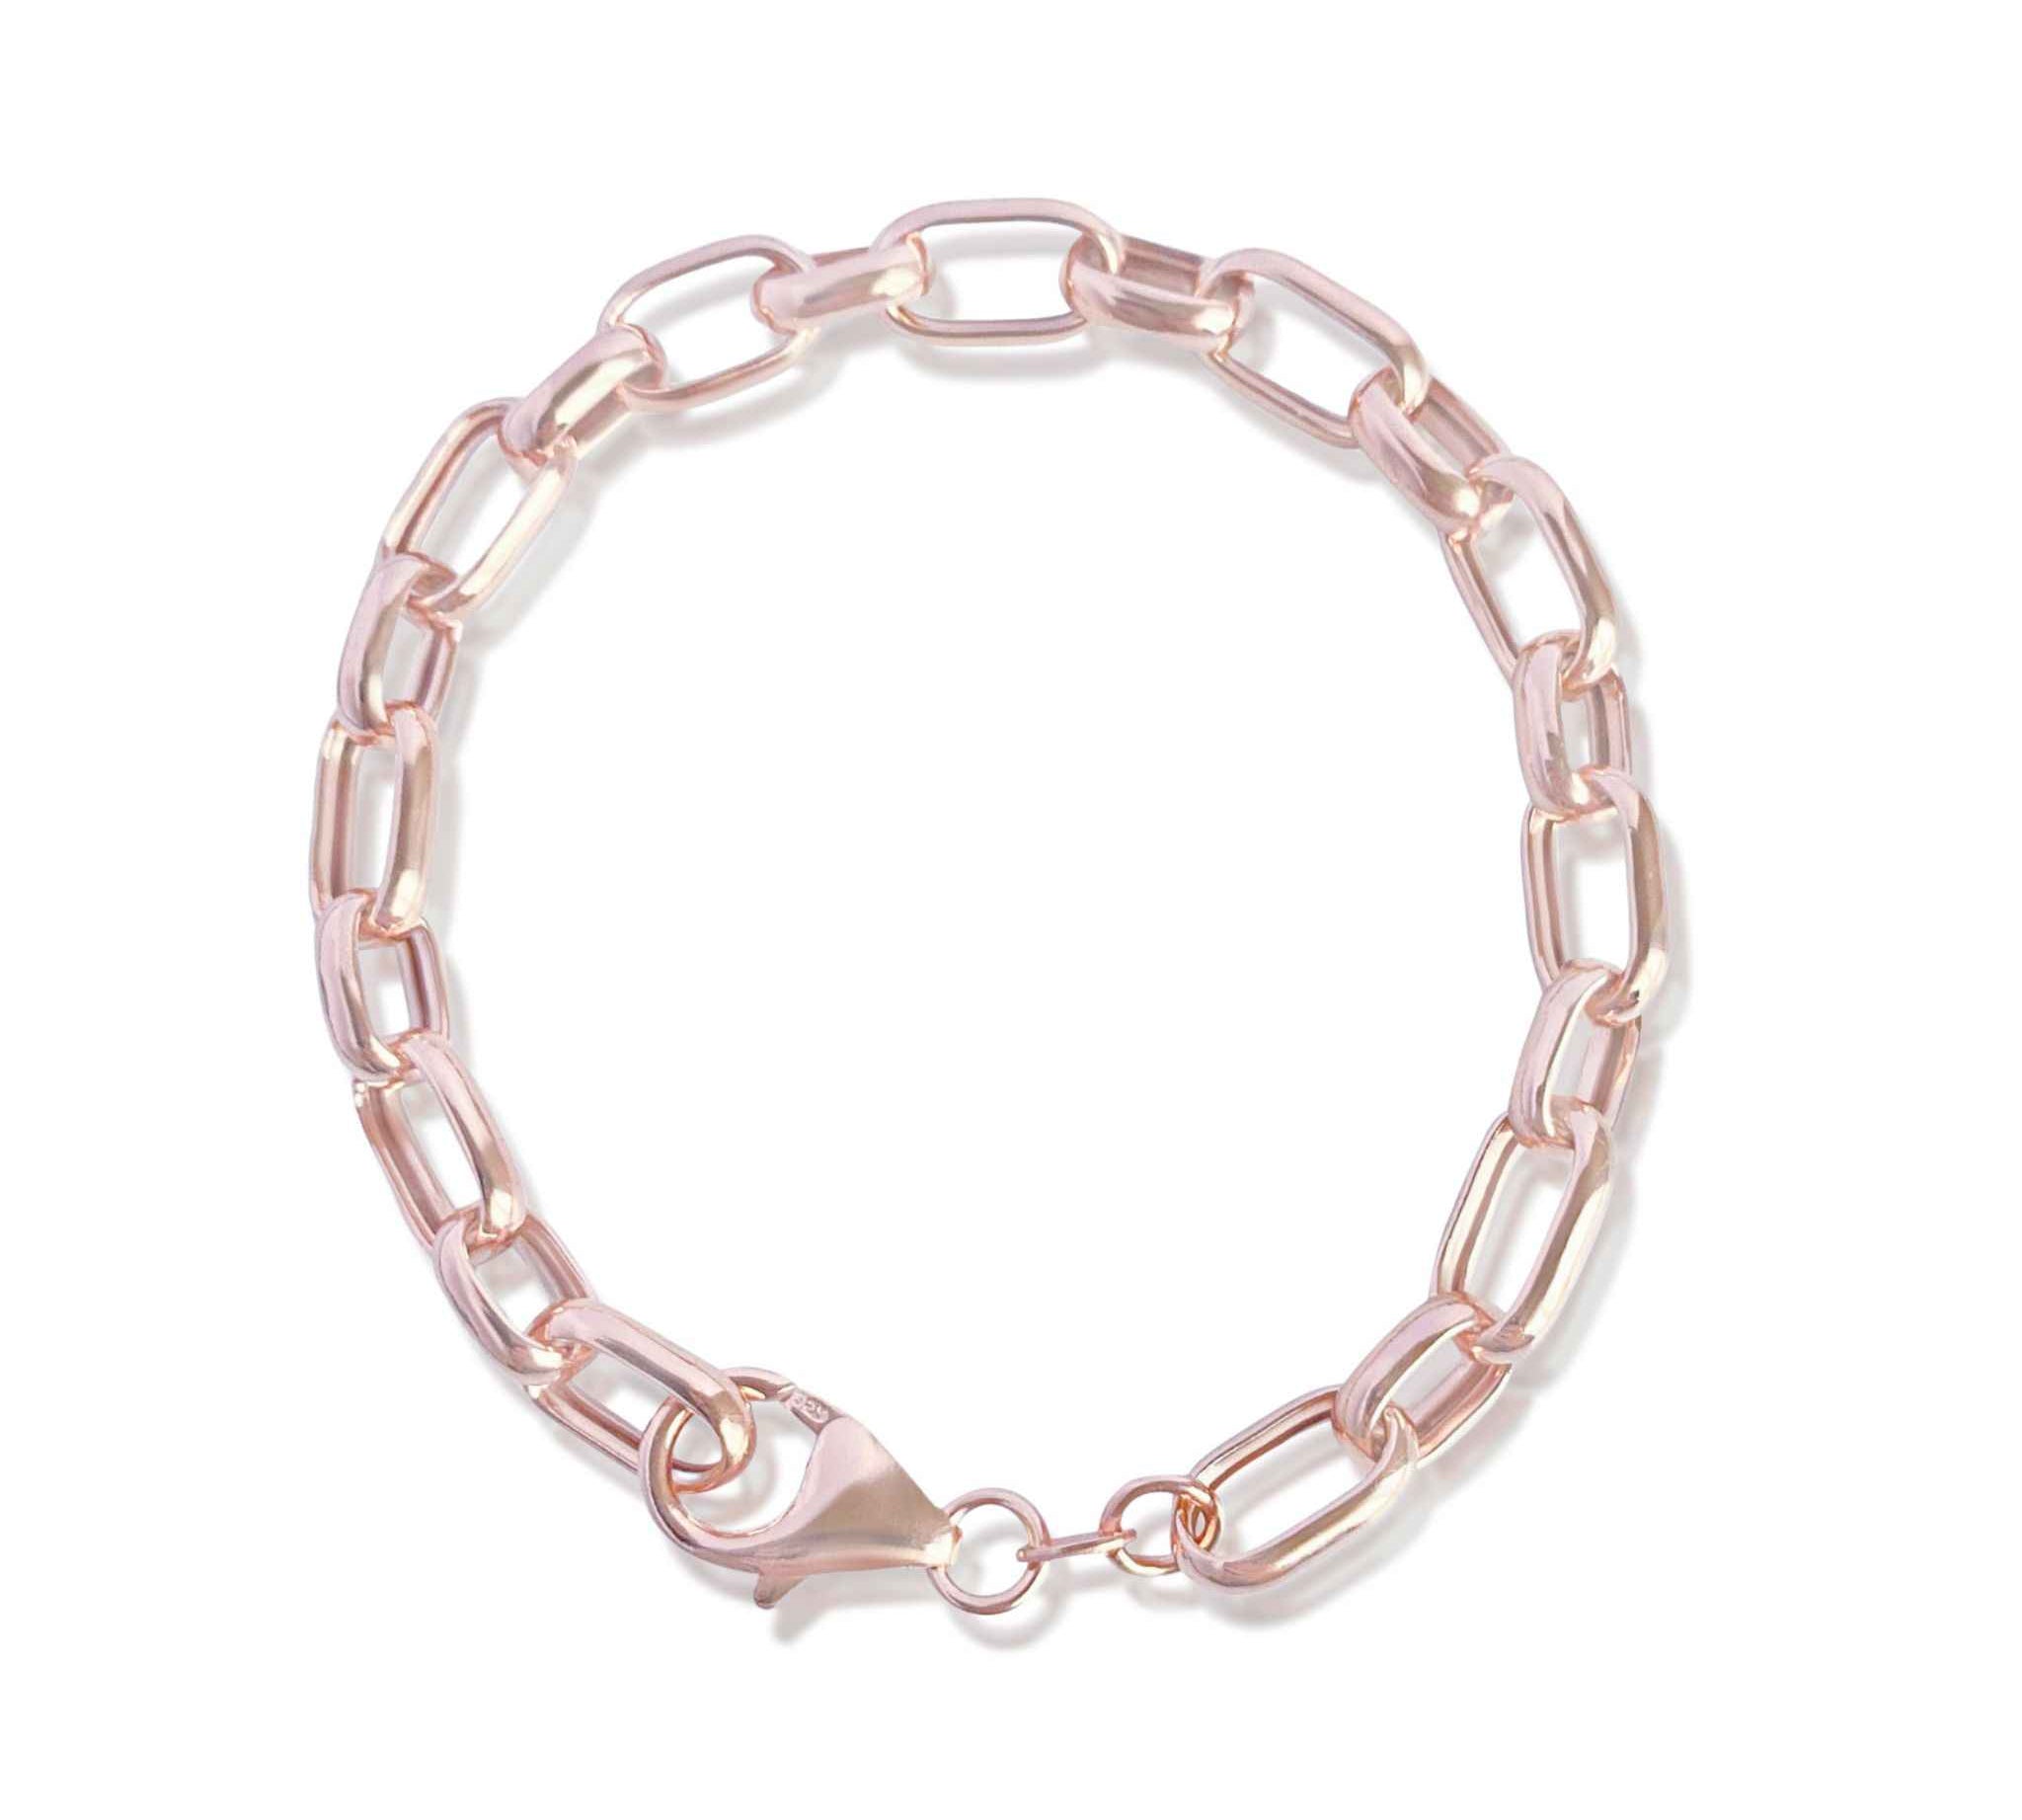 Graceful Rectangular Chain Link Bracelet in rose gold by Alessandra James.